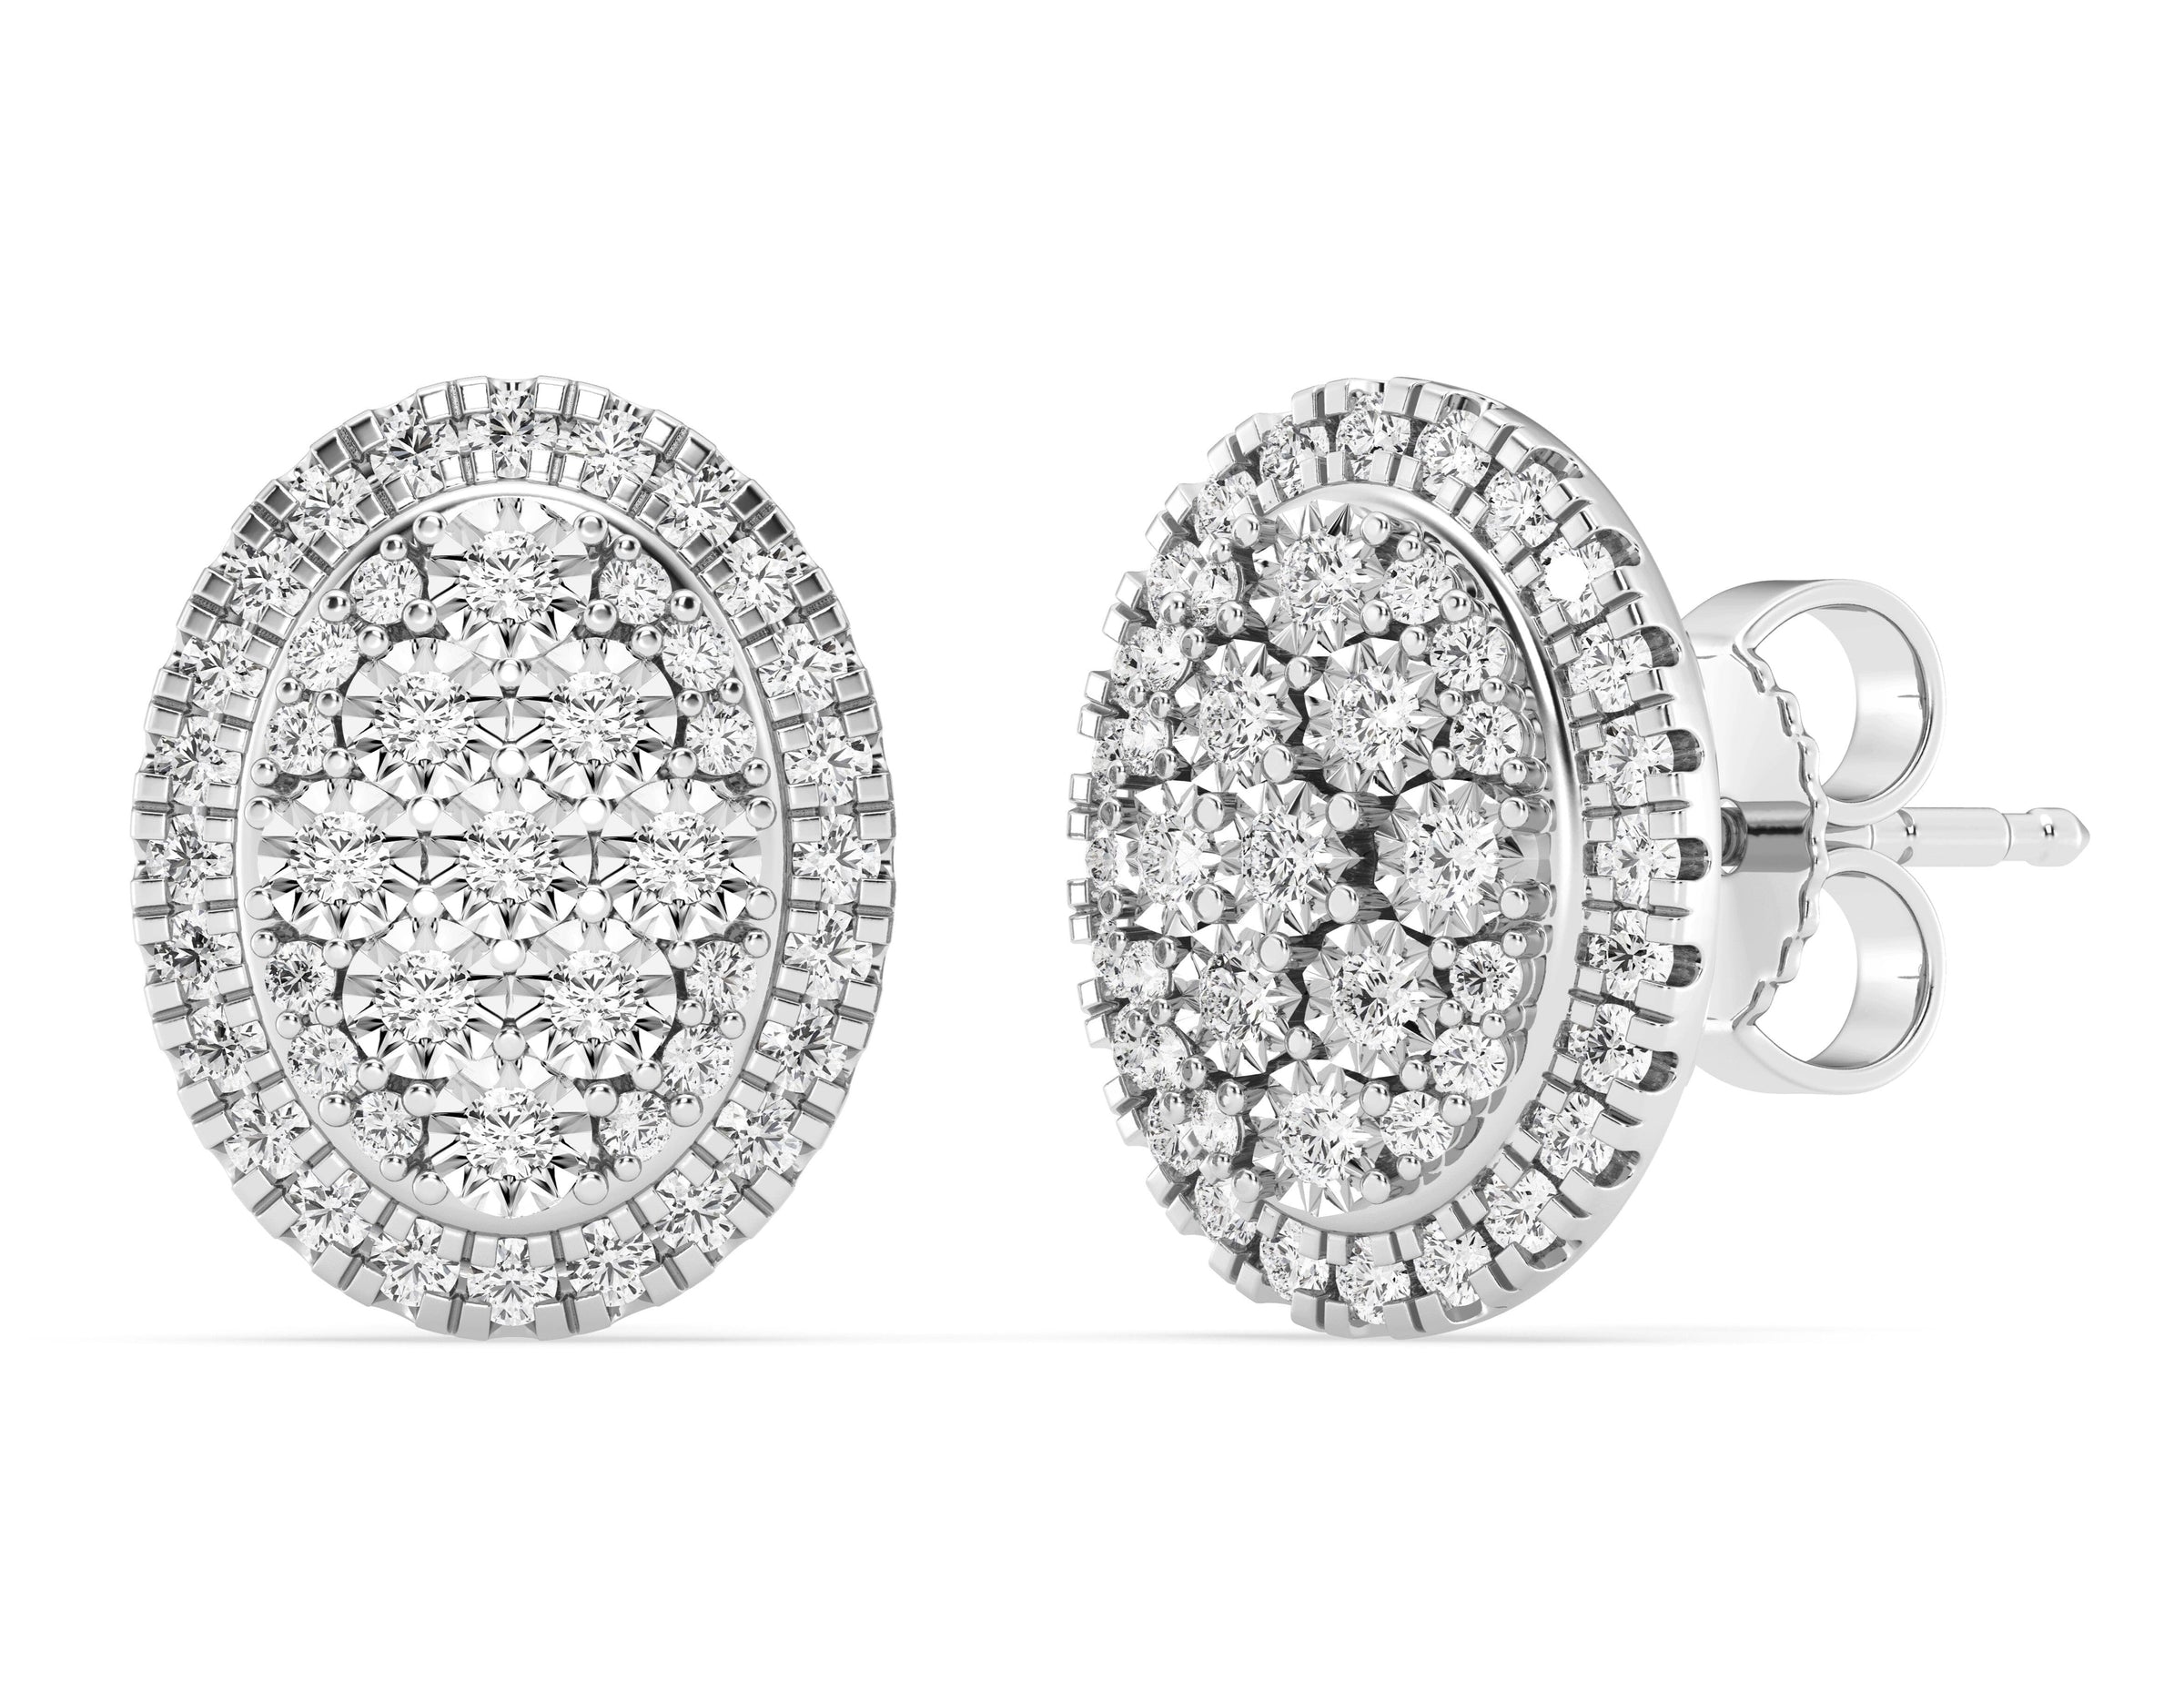 Halo Stud Earrings with 0.50ct Diamonds in Sterling Silver Earrings Bevilles 